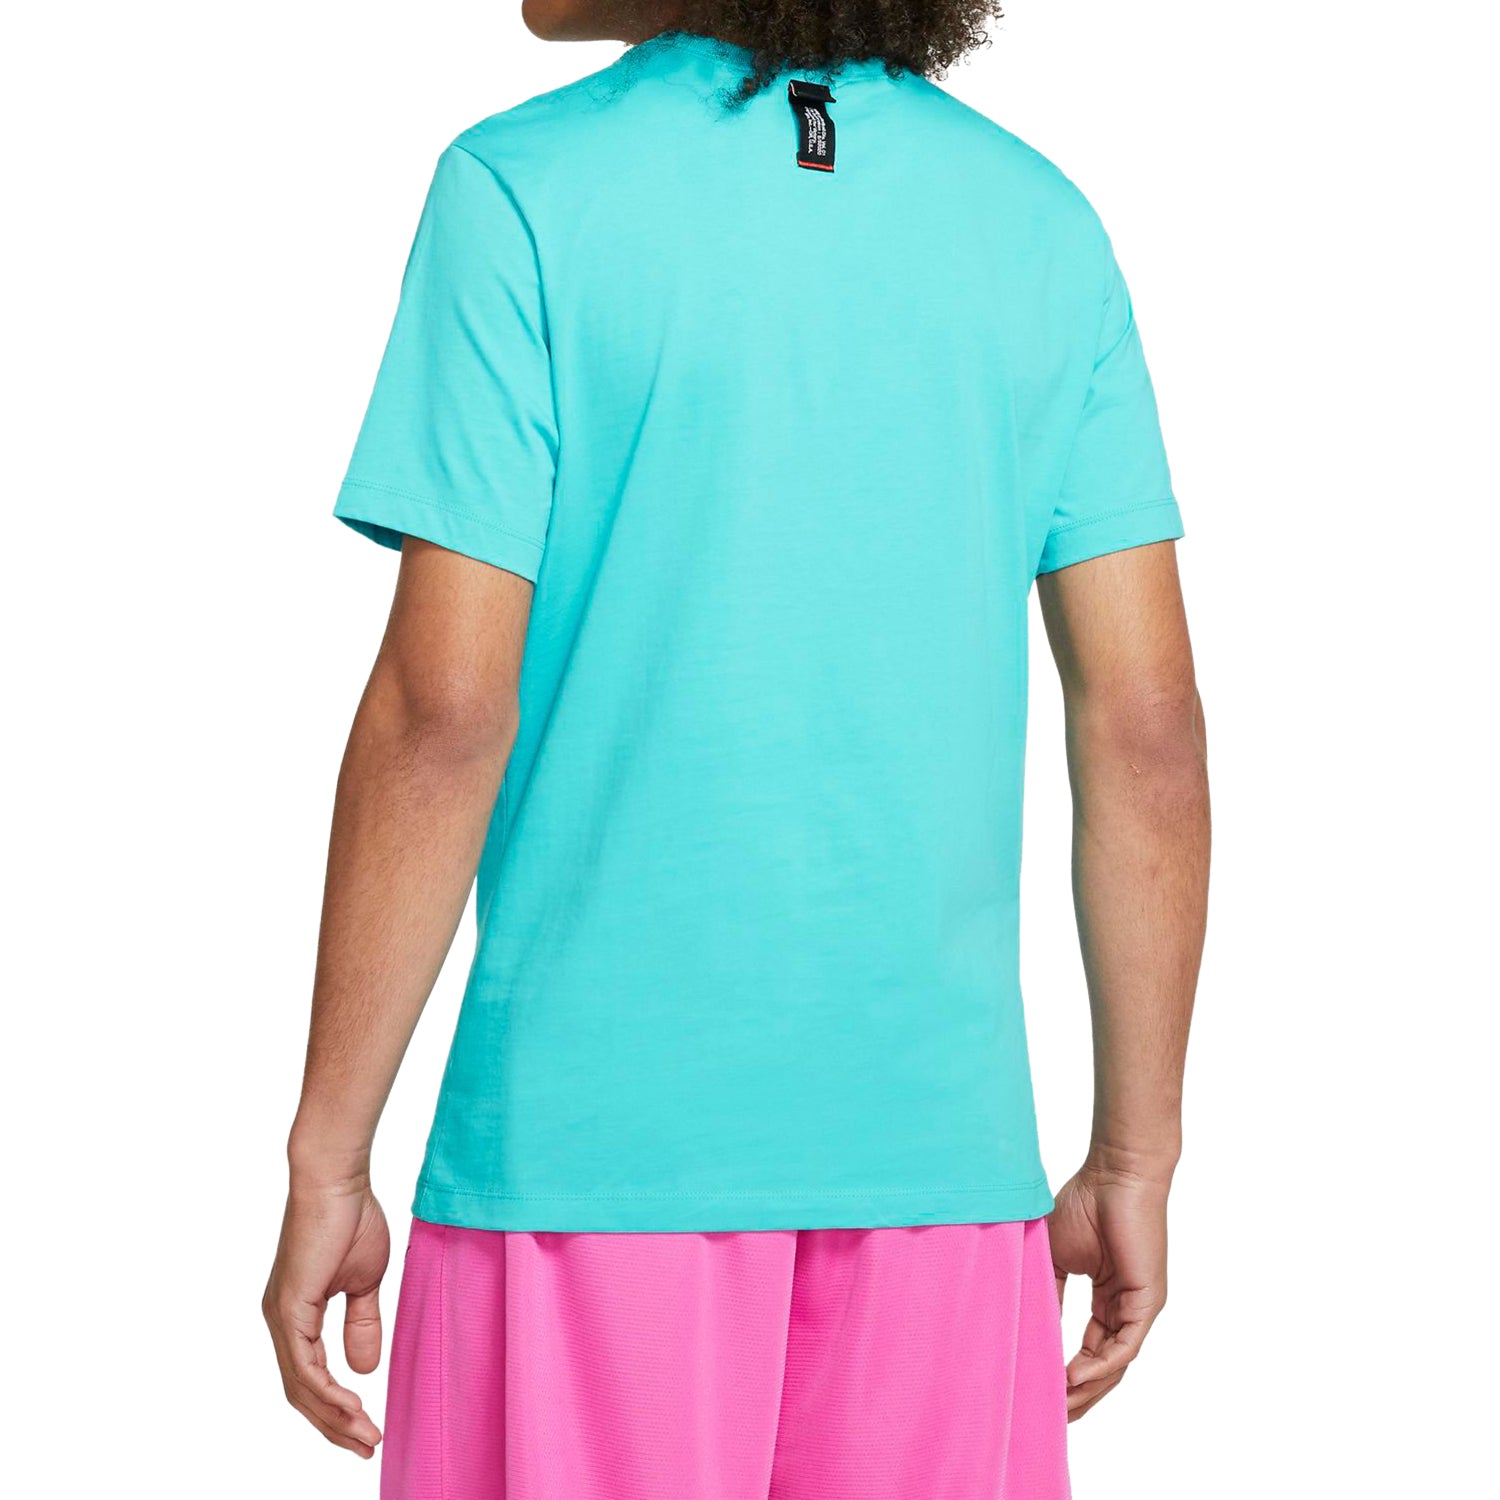 Nike Exploration Series Basketball T-shirt Mens Style : Cd1306